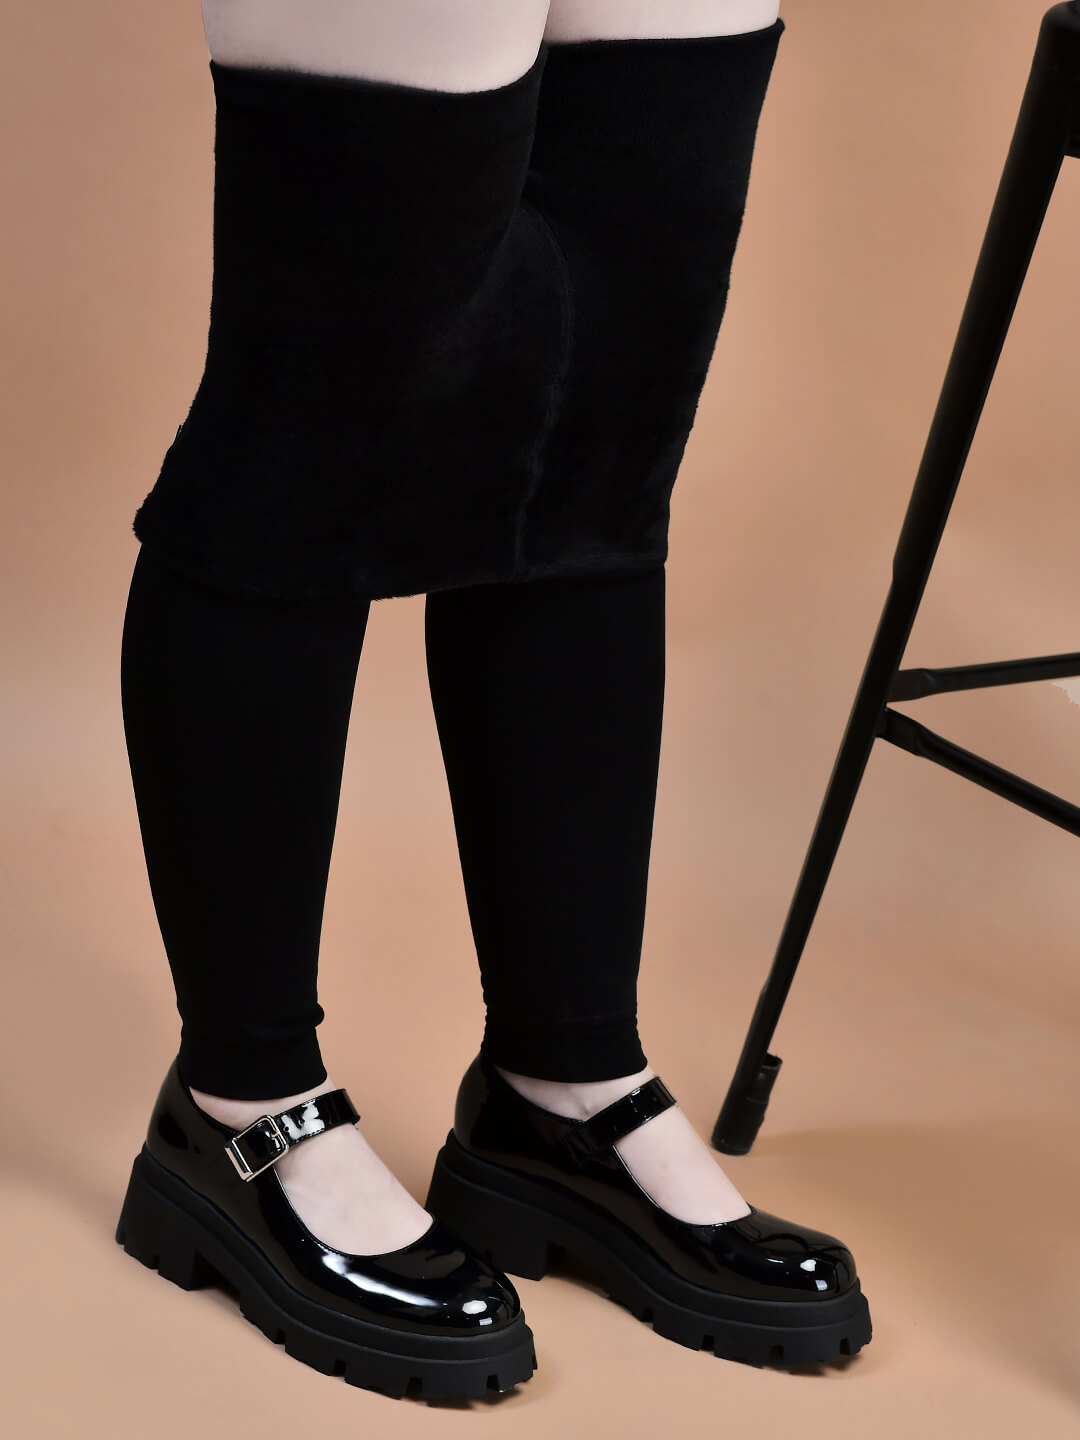 Max Landon Limited Edition Winter Leggings Fur Stockings – Premium Quality  – Nari Comfort Wear